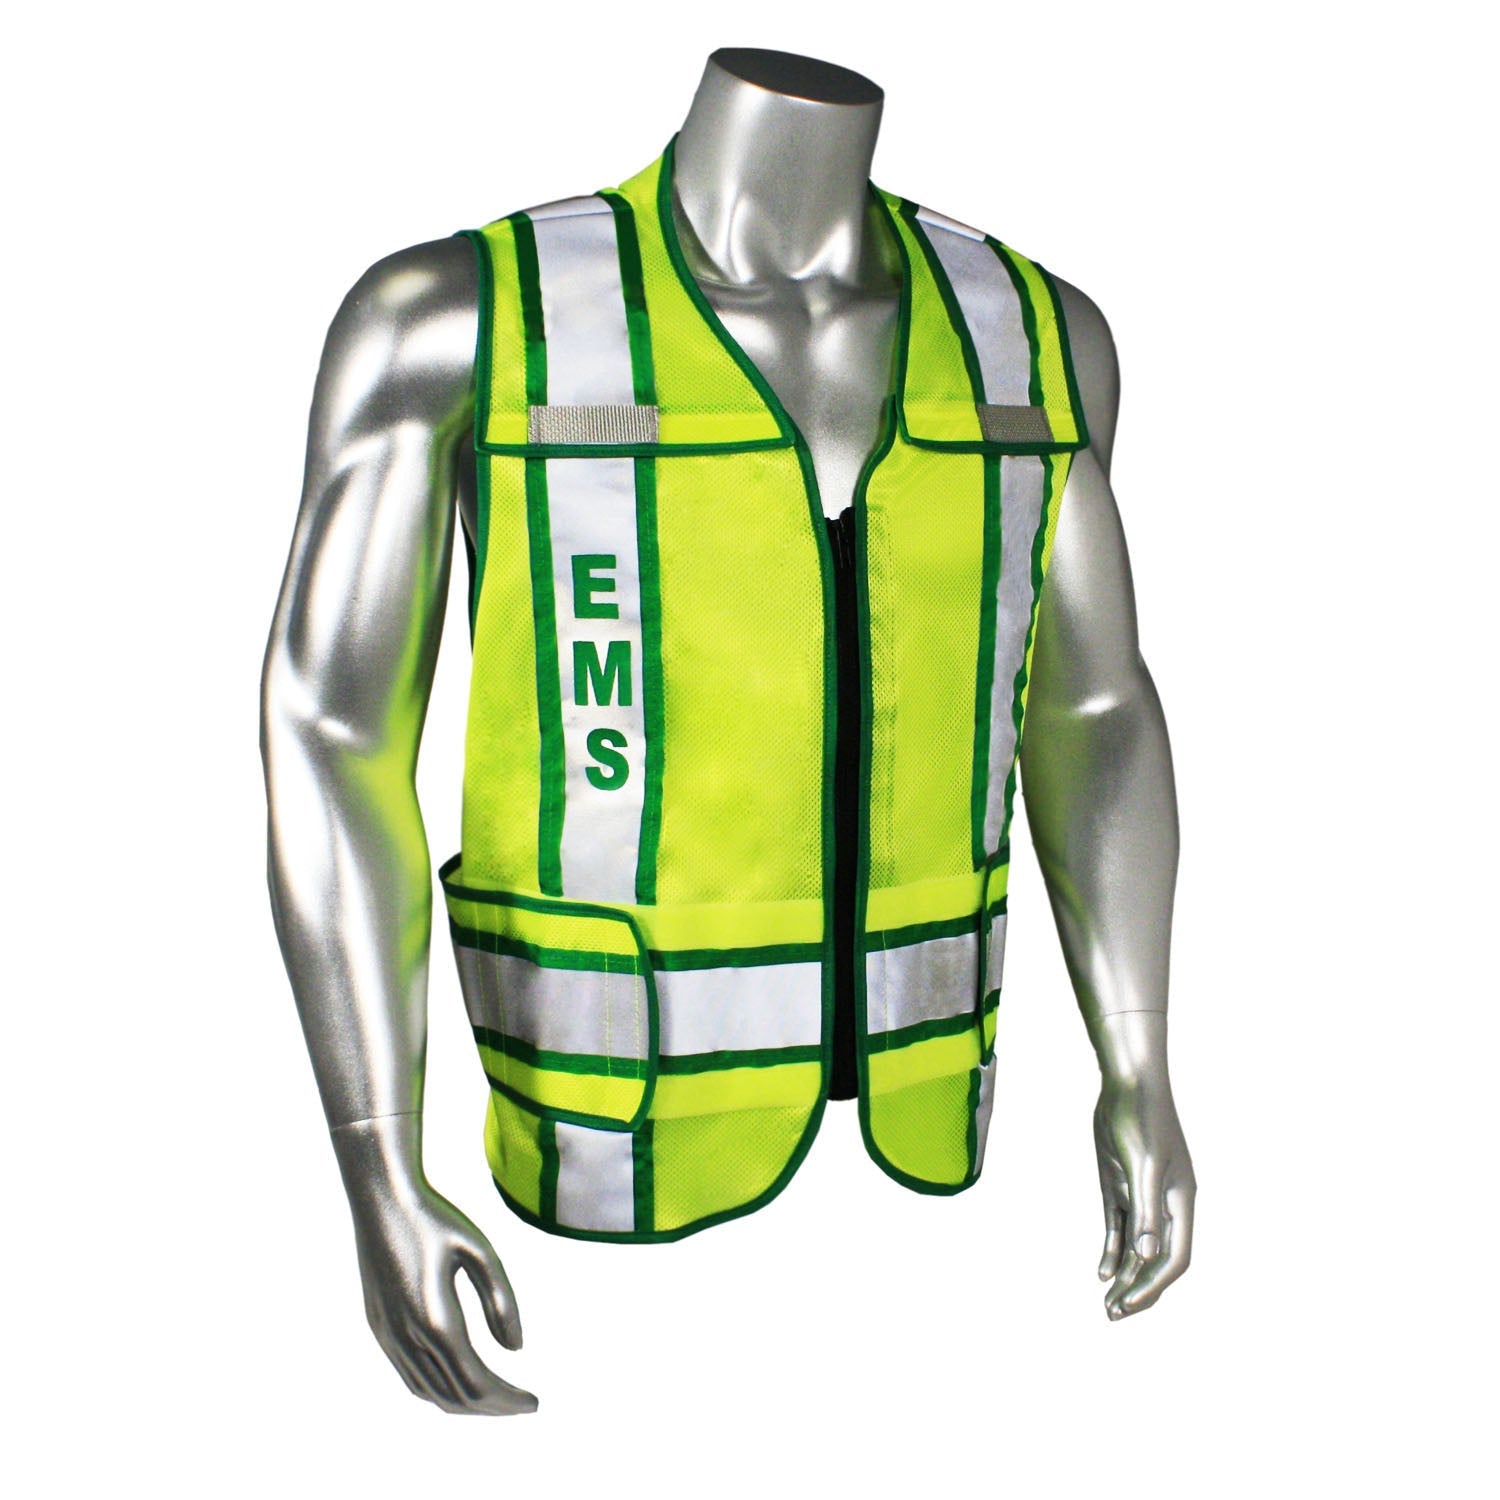 Radwear USA LHV-207-3G Safety Vest - EMS